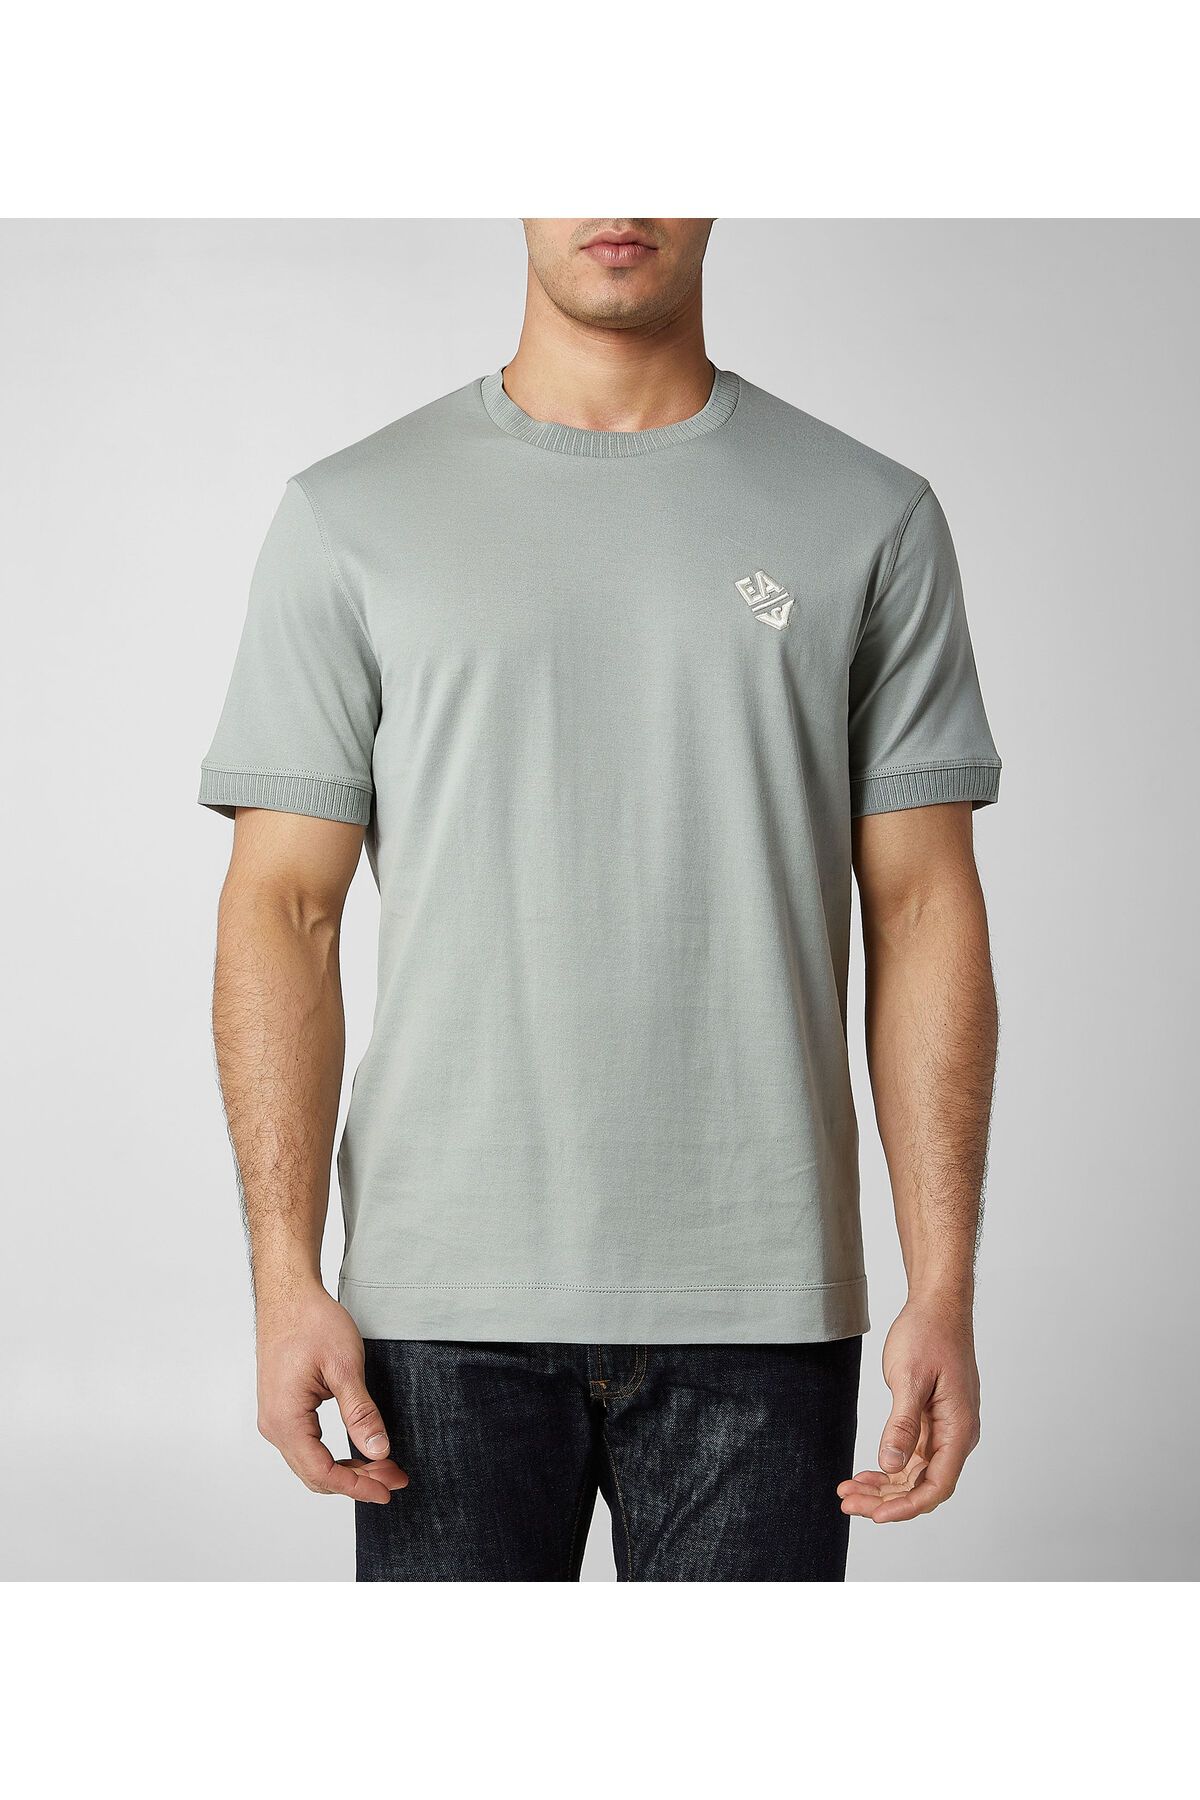 Emporio Armani Erkek Marka Logolu Pamuklu Normal Kalıp Günlük Yeşil T-Shirt 3D1TN3 1JOCZ-0664